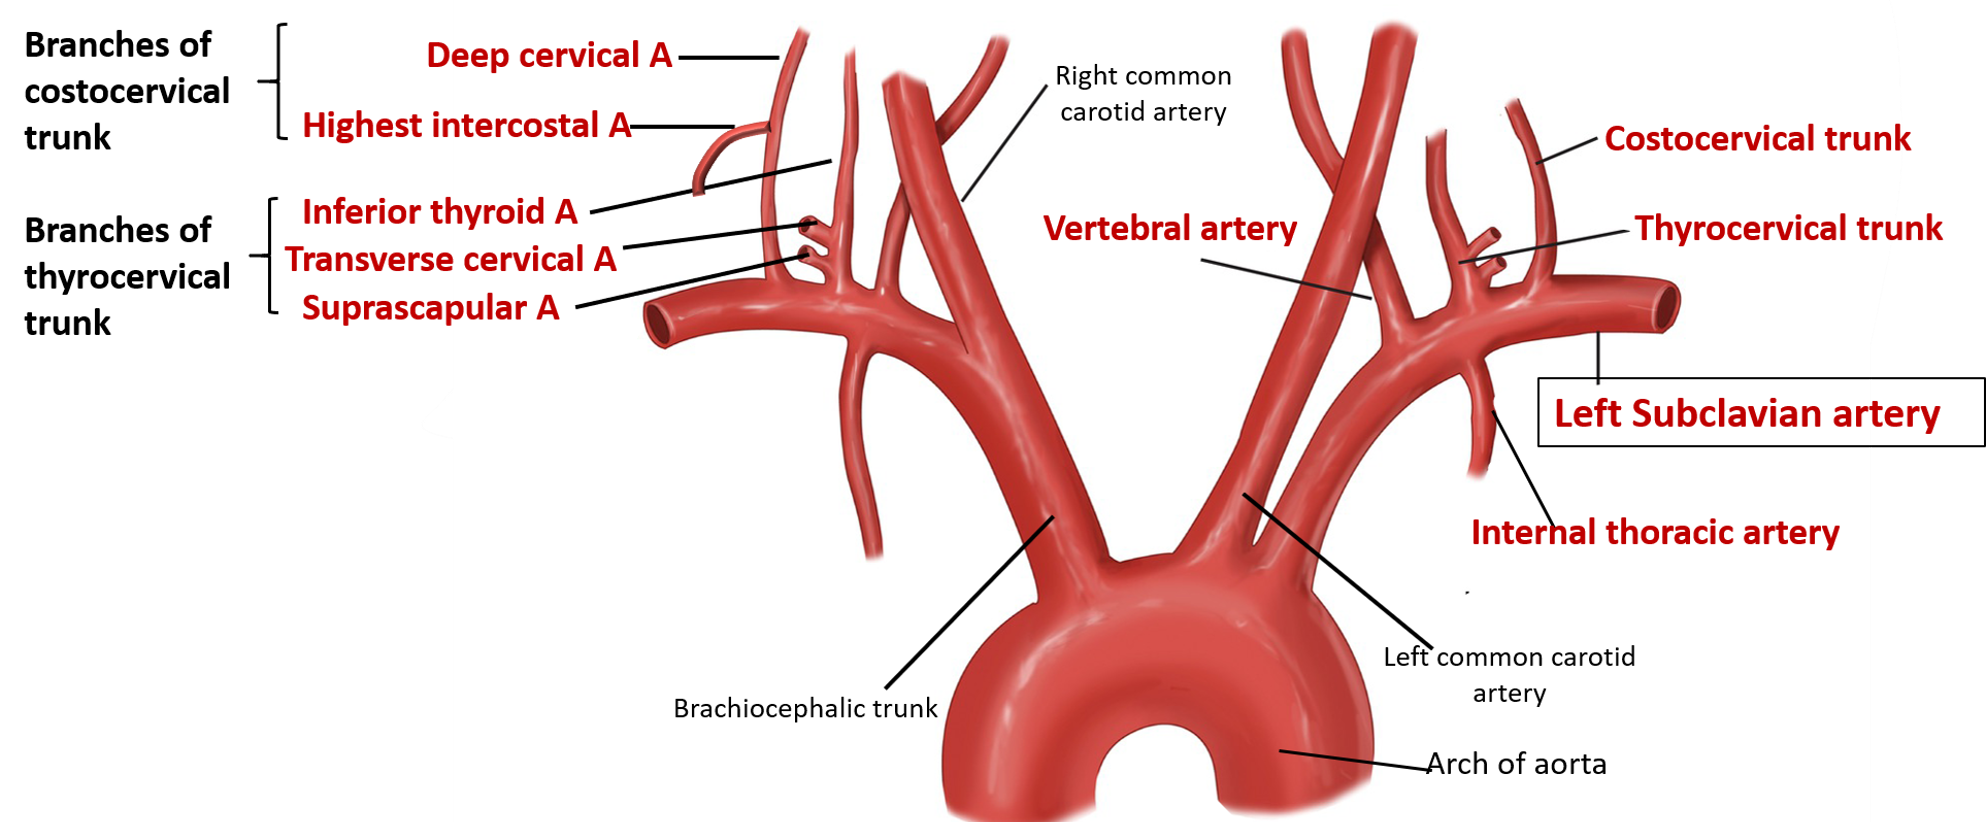 Subclavian Artery Anatomy Qa